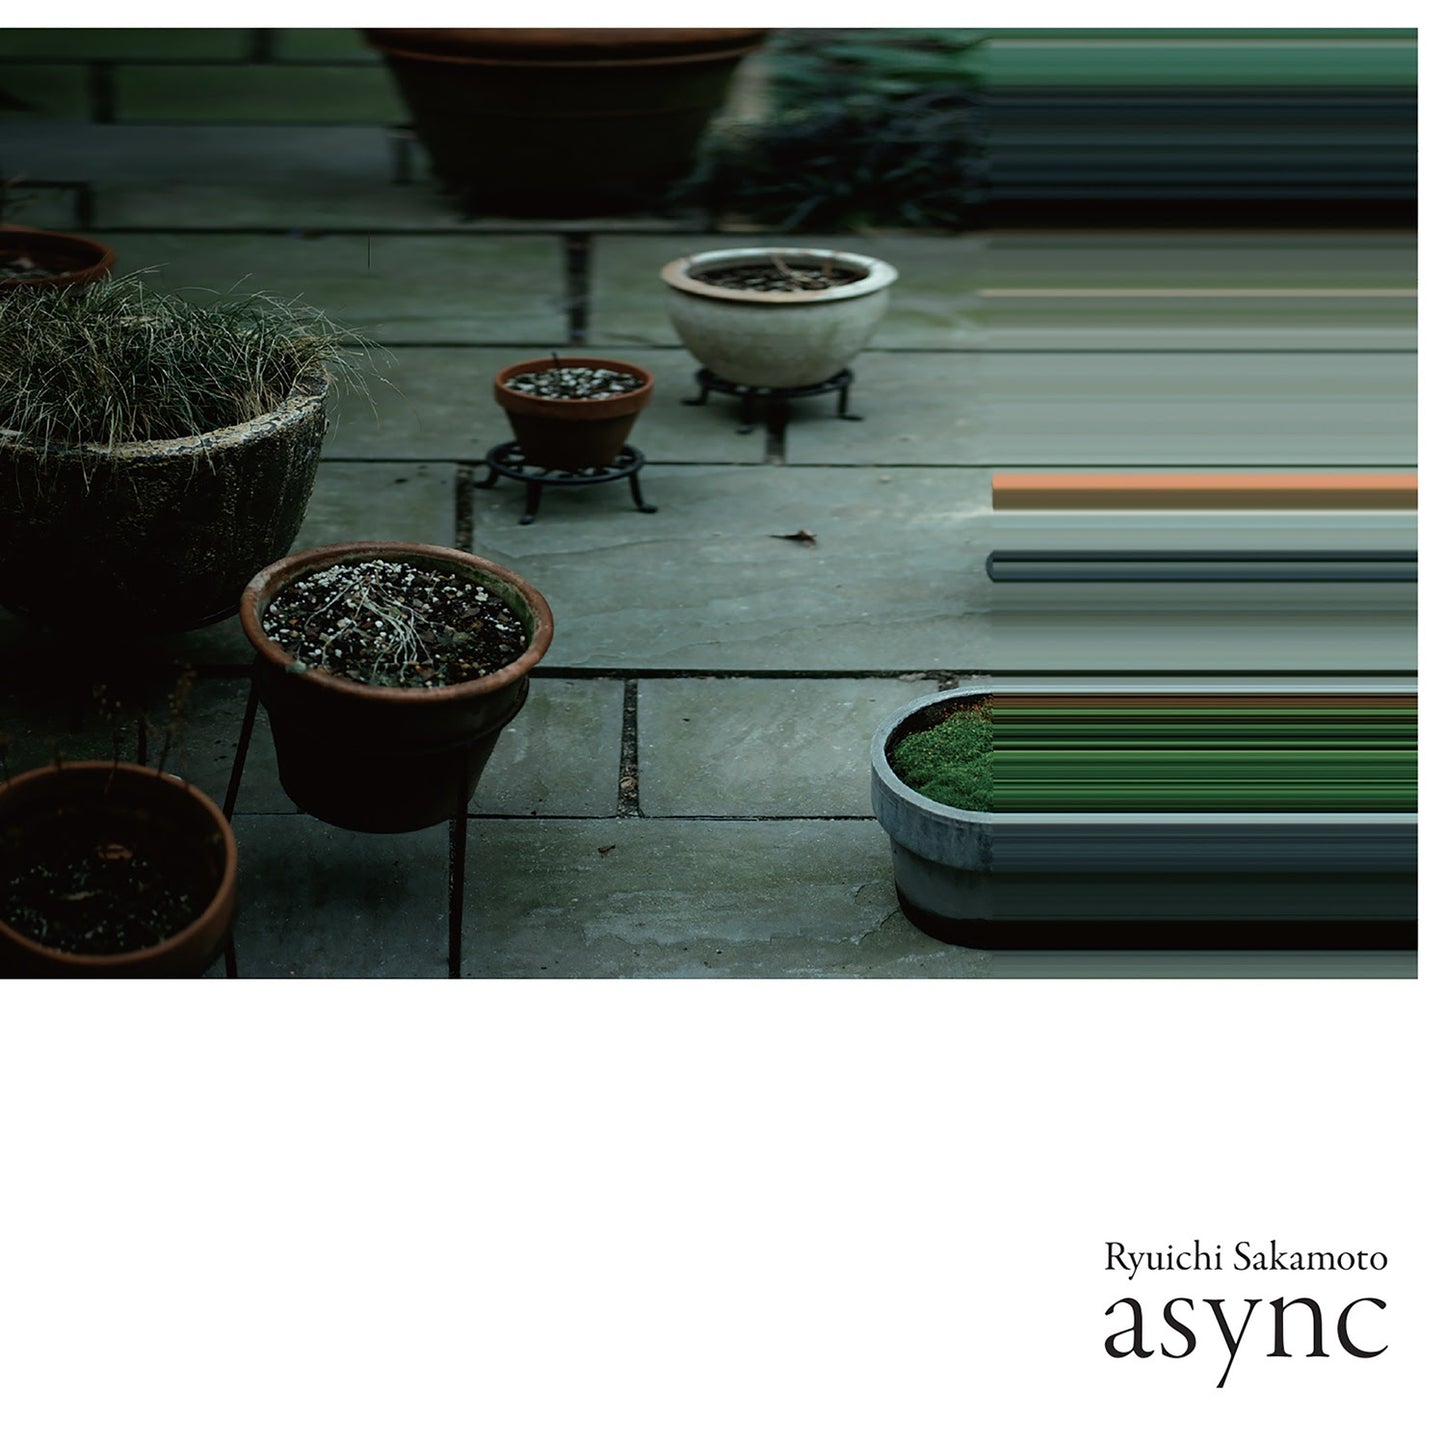 Ryuichi Sakamoto – Async | Buy the Vinyl LP from Flying Nun Records